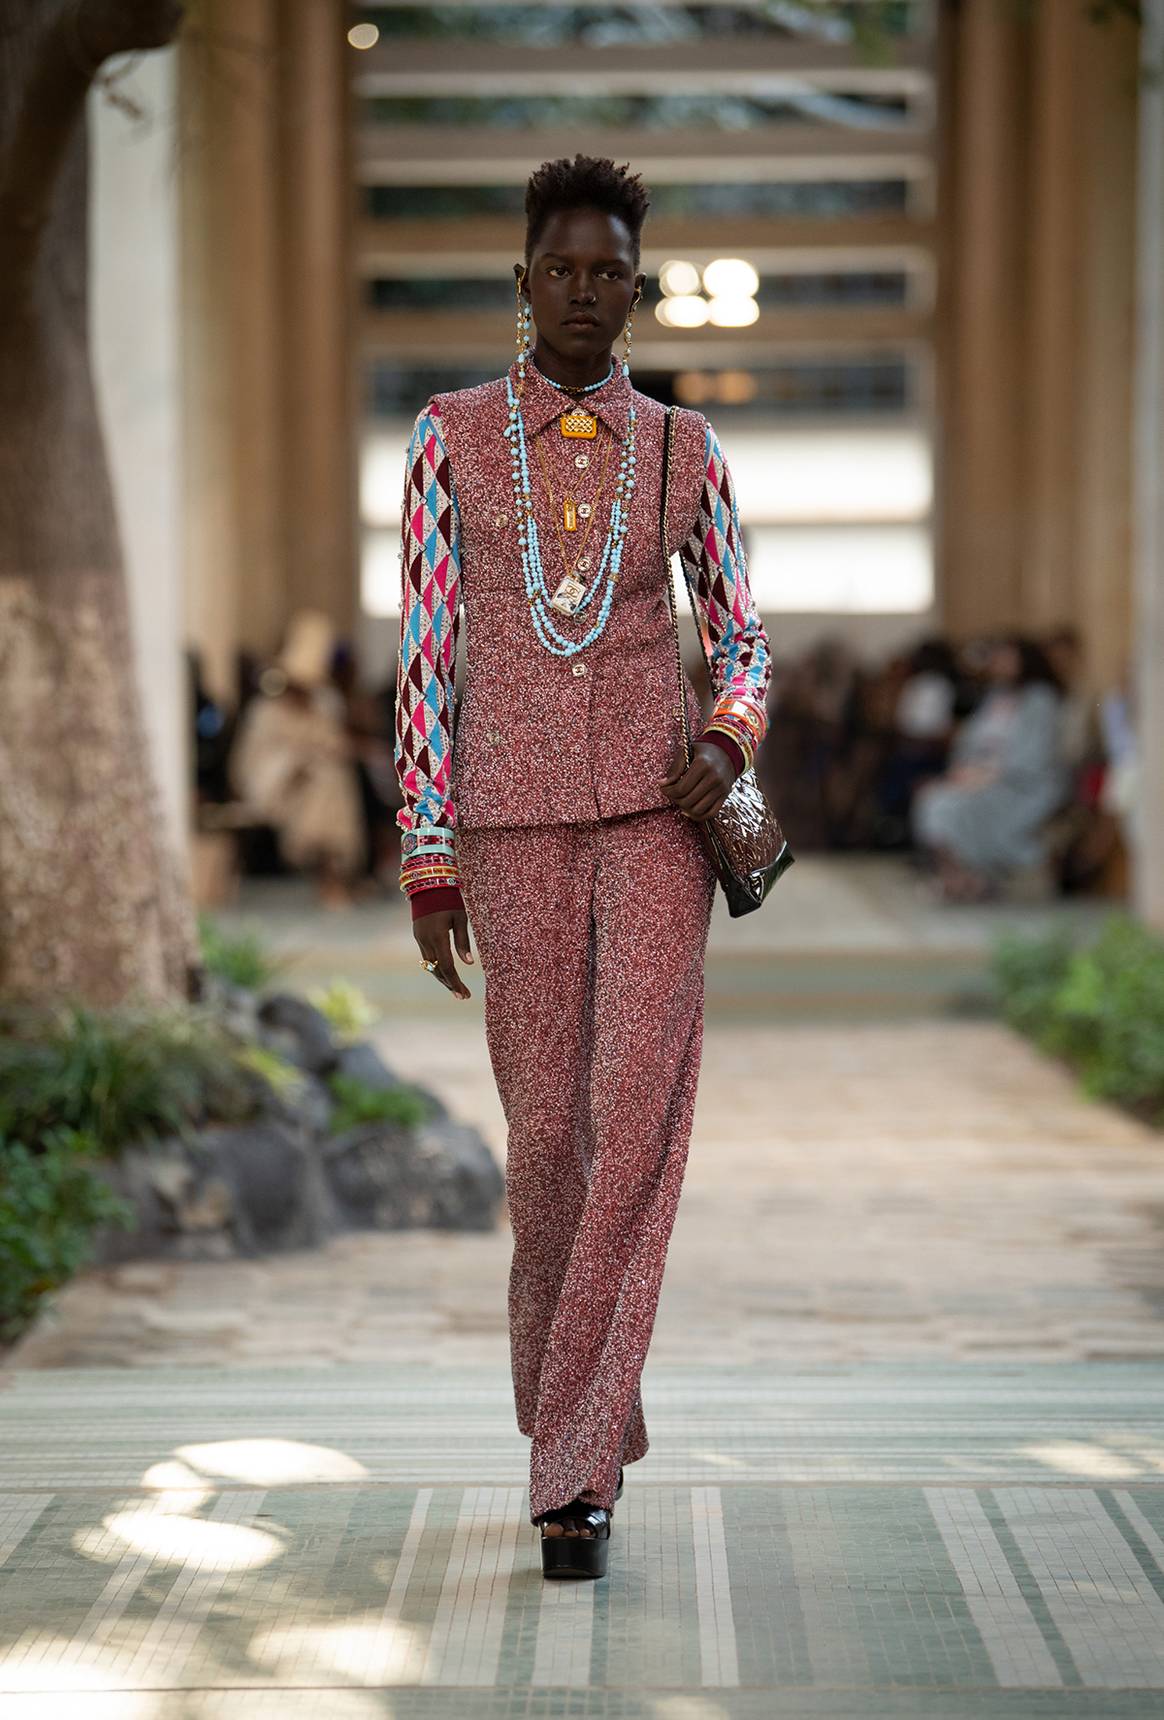 Photo Credits: Chanel, colección Dakar 2022/23 Métiers d’art collection. Fotografía de cortesía.